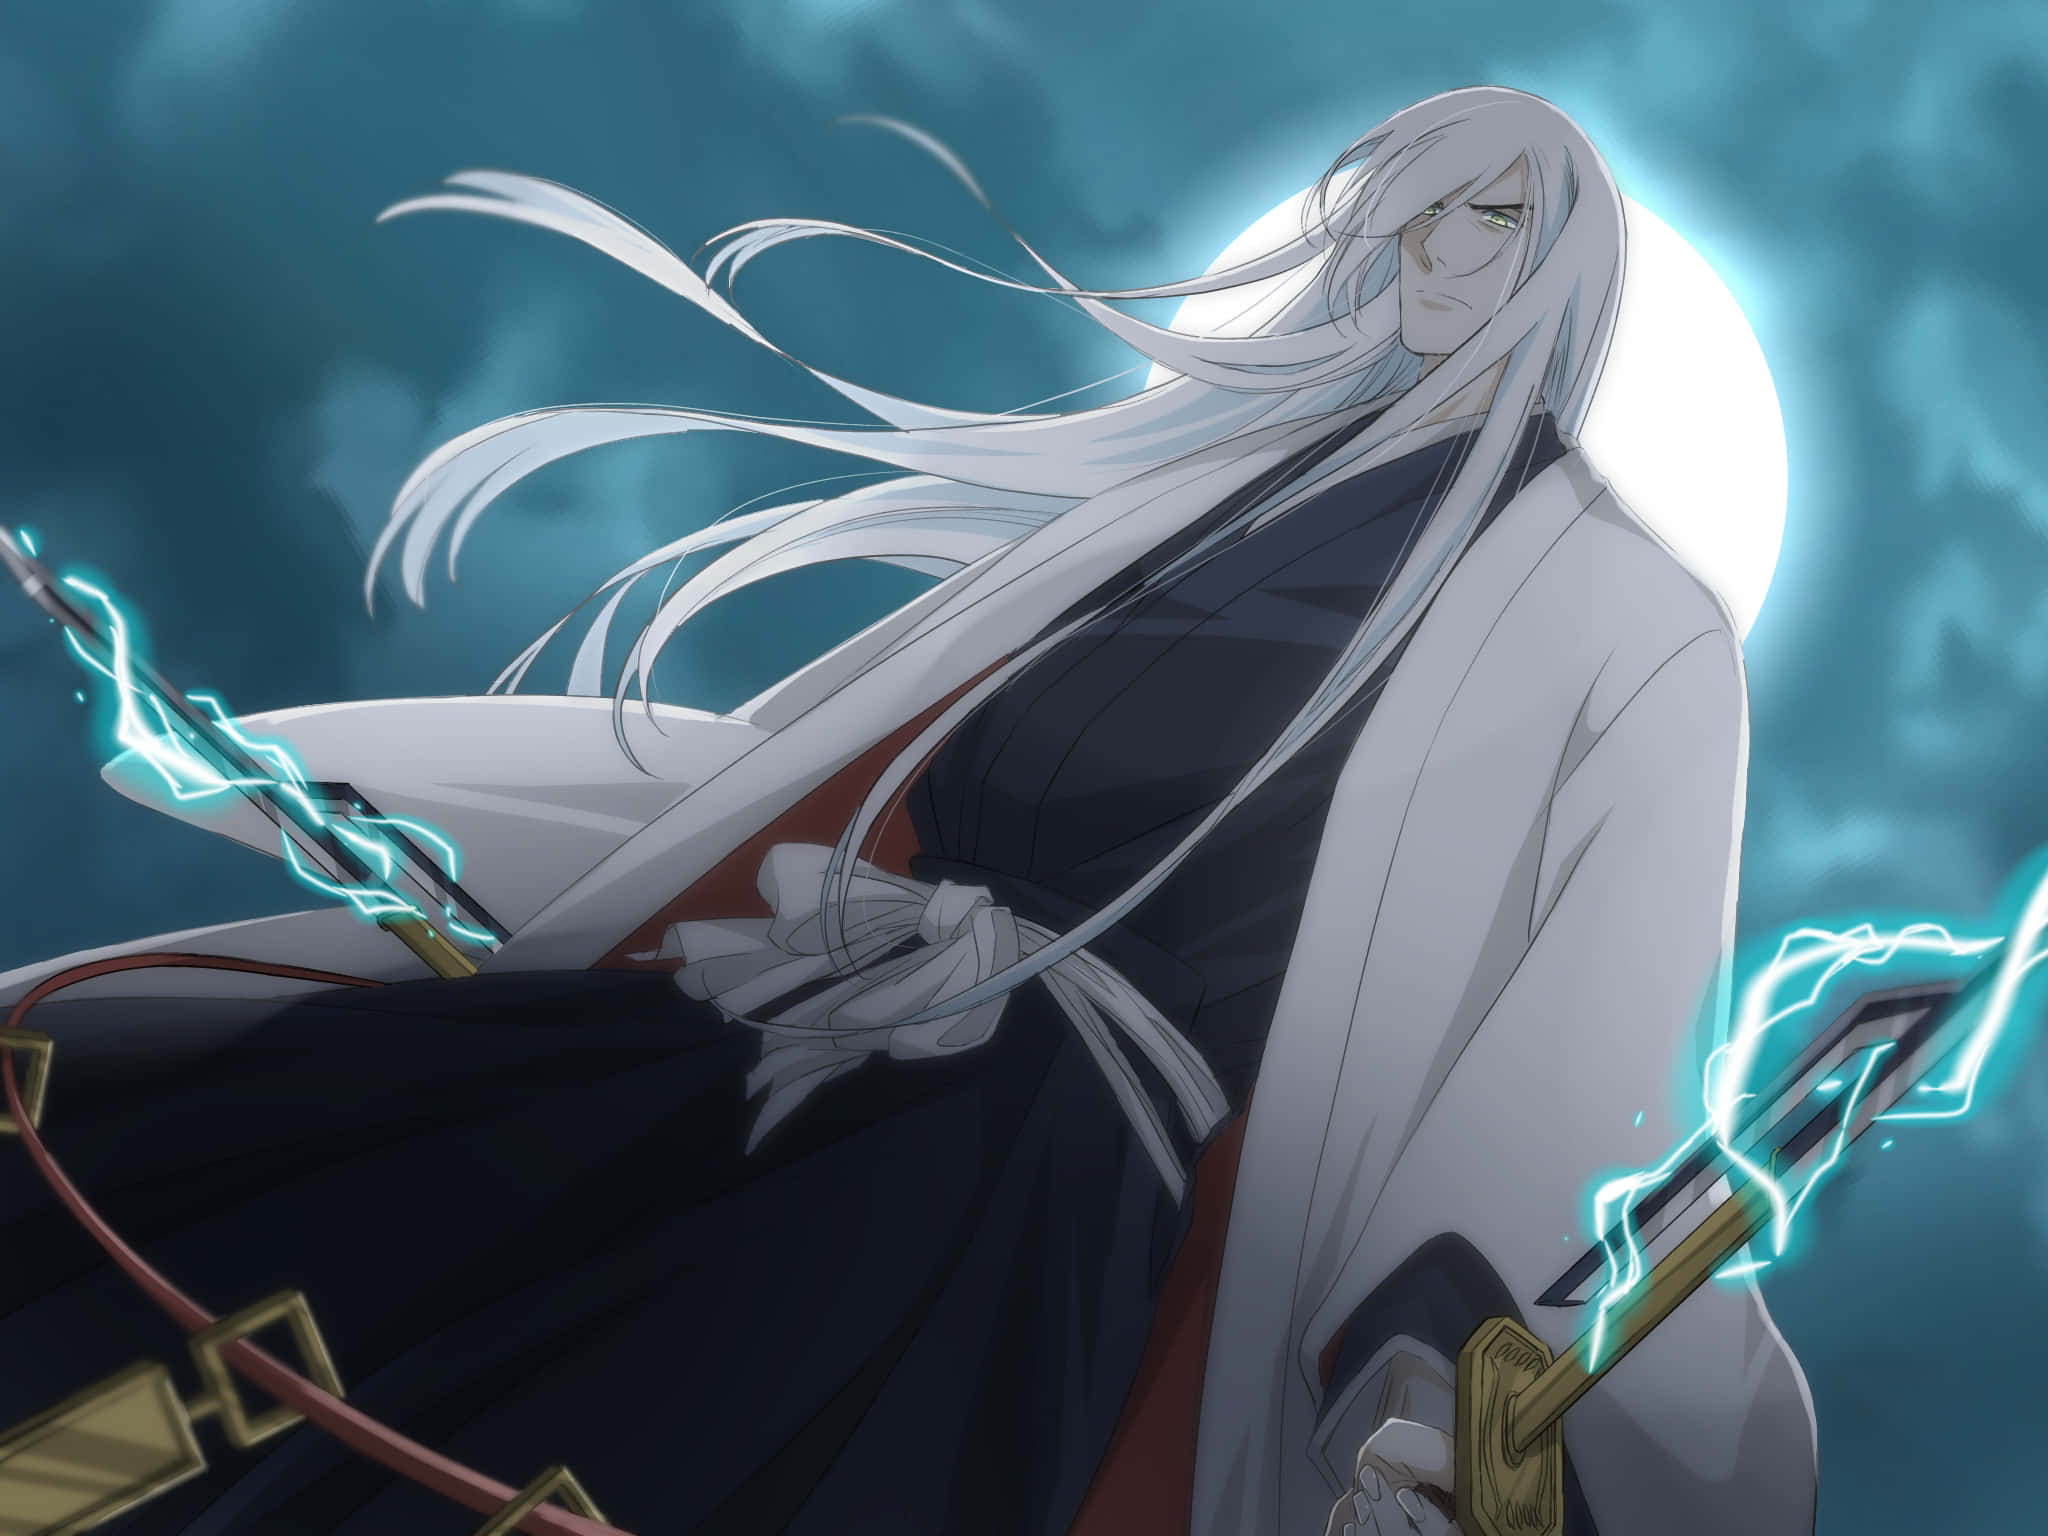 Jushiro Ukitake, a powerful Soul Reaper from Bleach Wallpaper